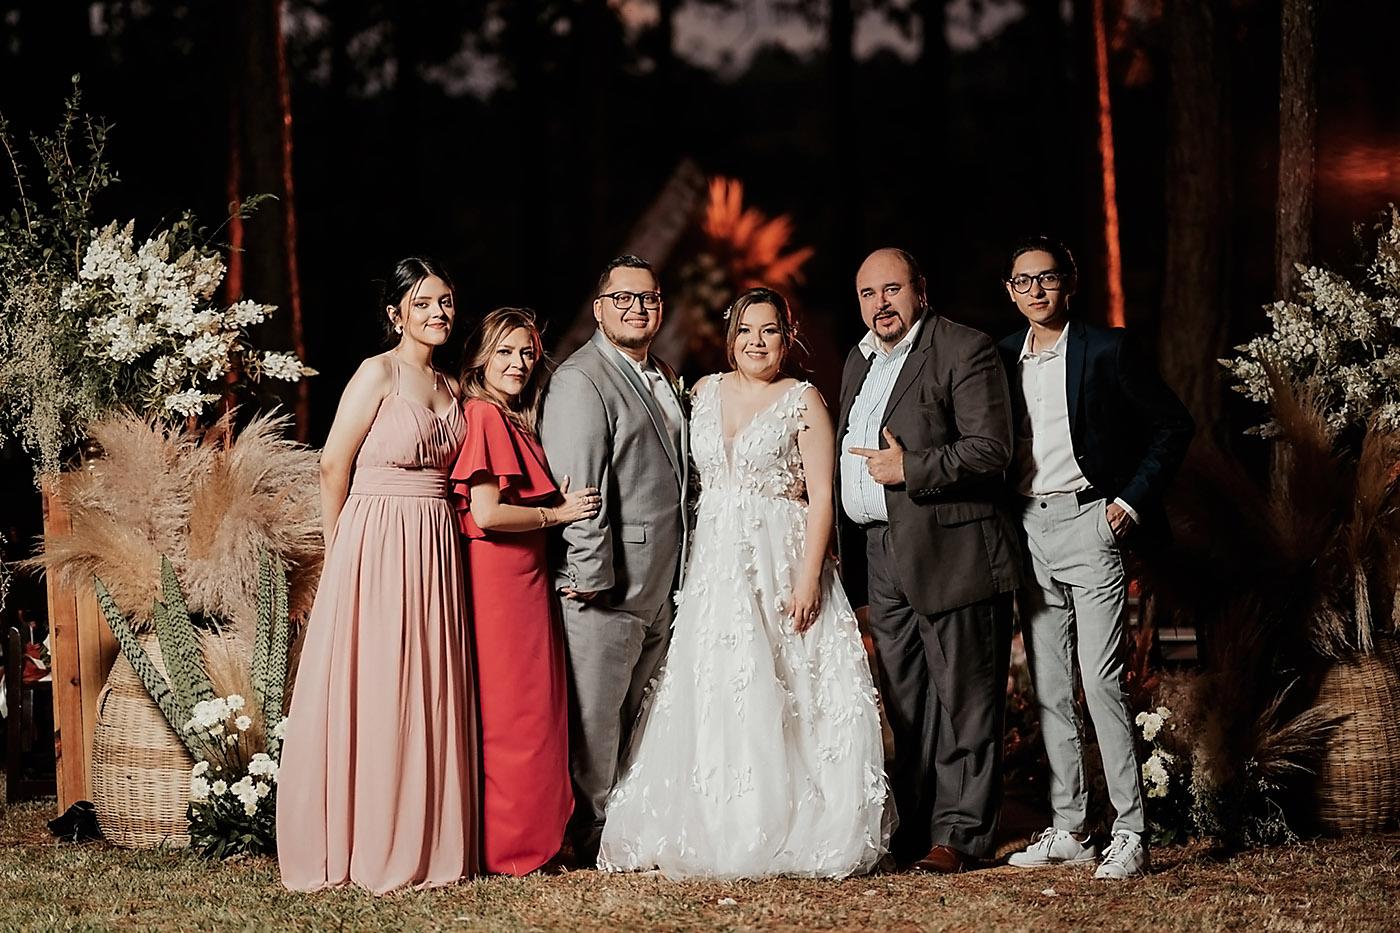 La boda de Alejandra Villela Barletta y David Cuellar Boves